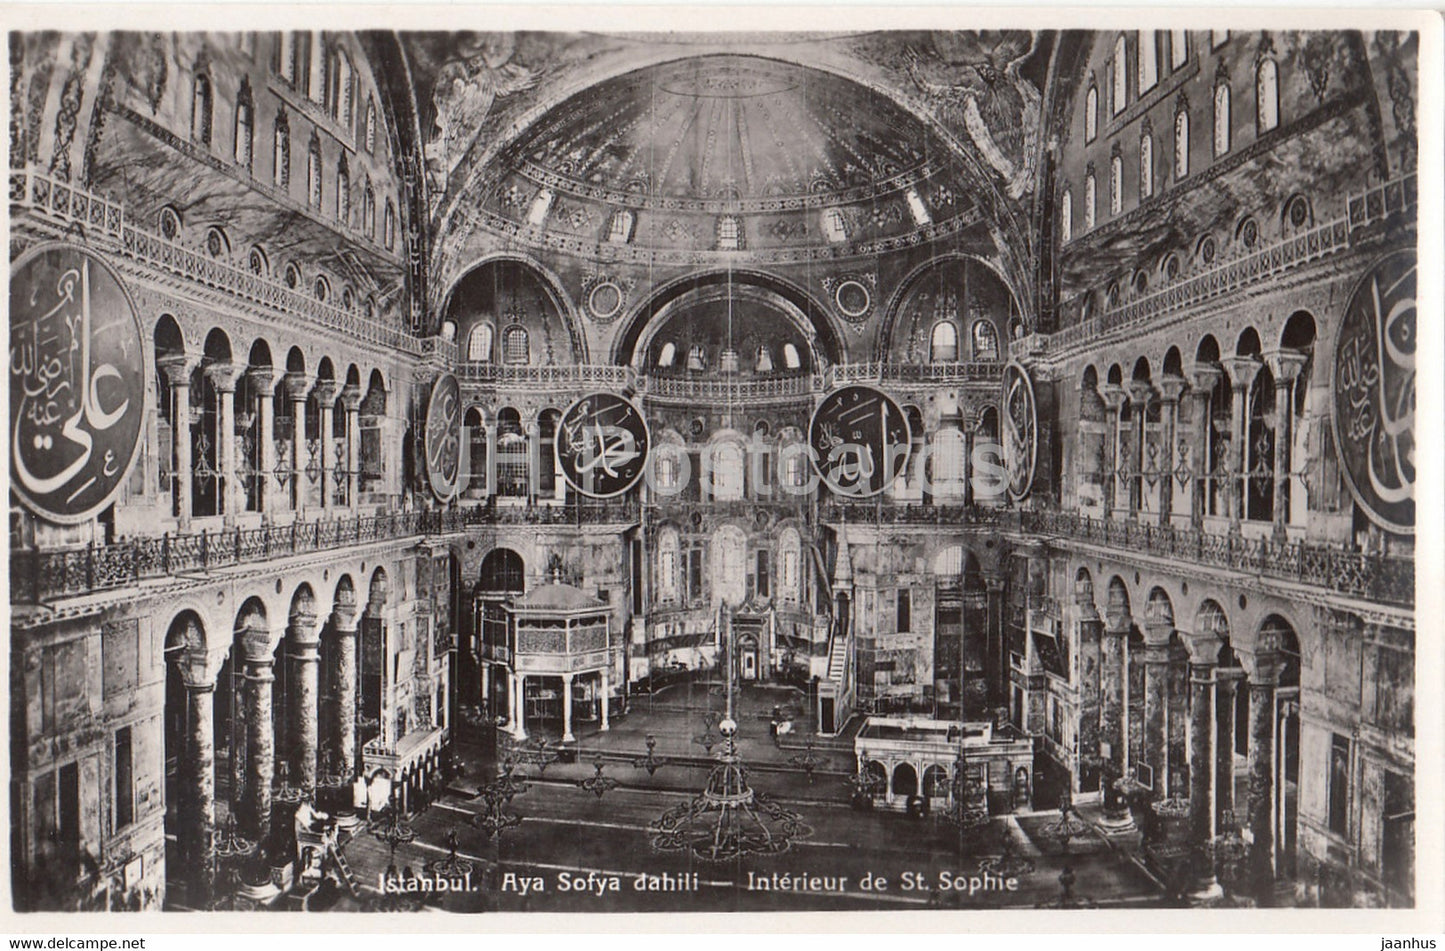 Istanbul - Interieur de St Sophie - old postcard - Turkey - unused - JH Postcards